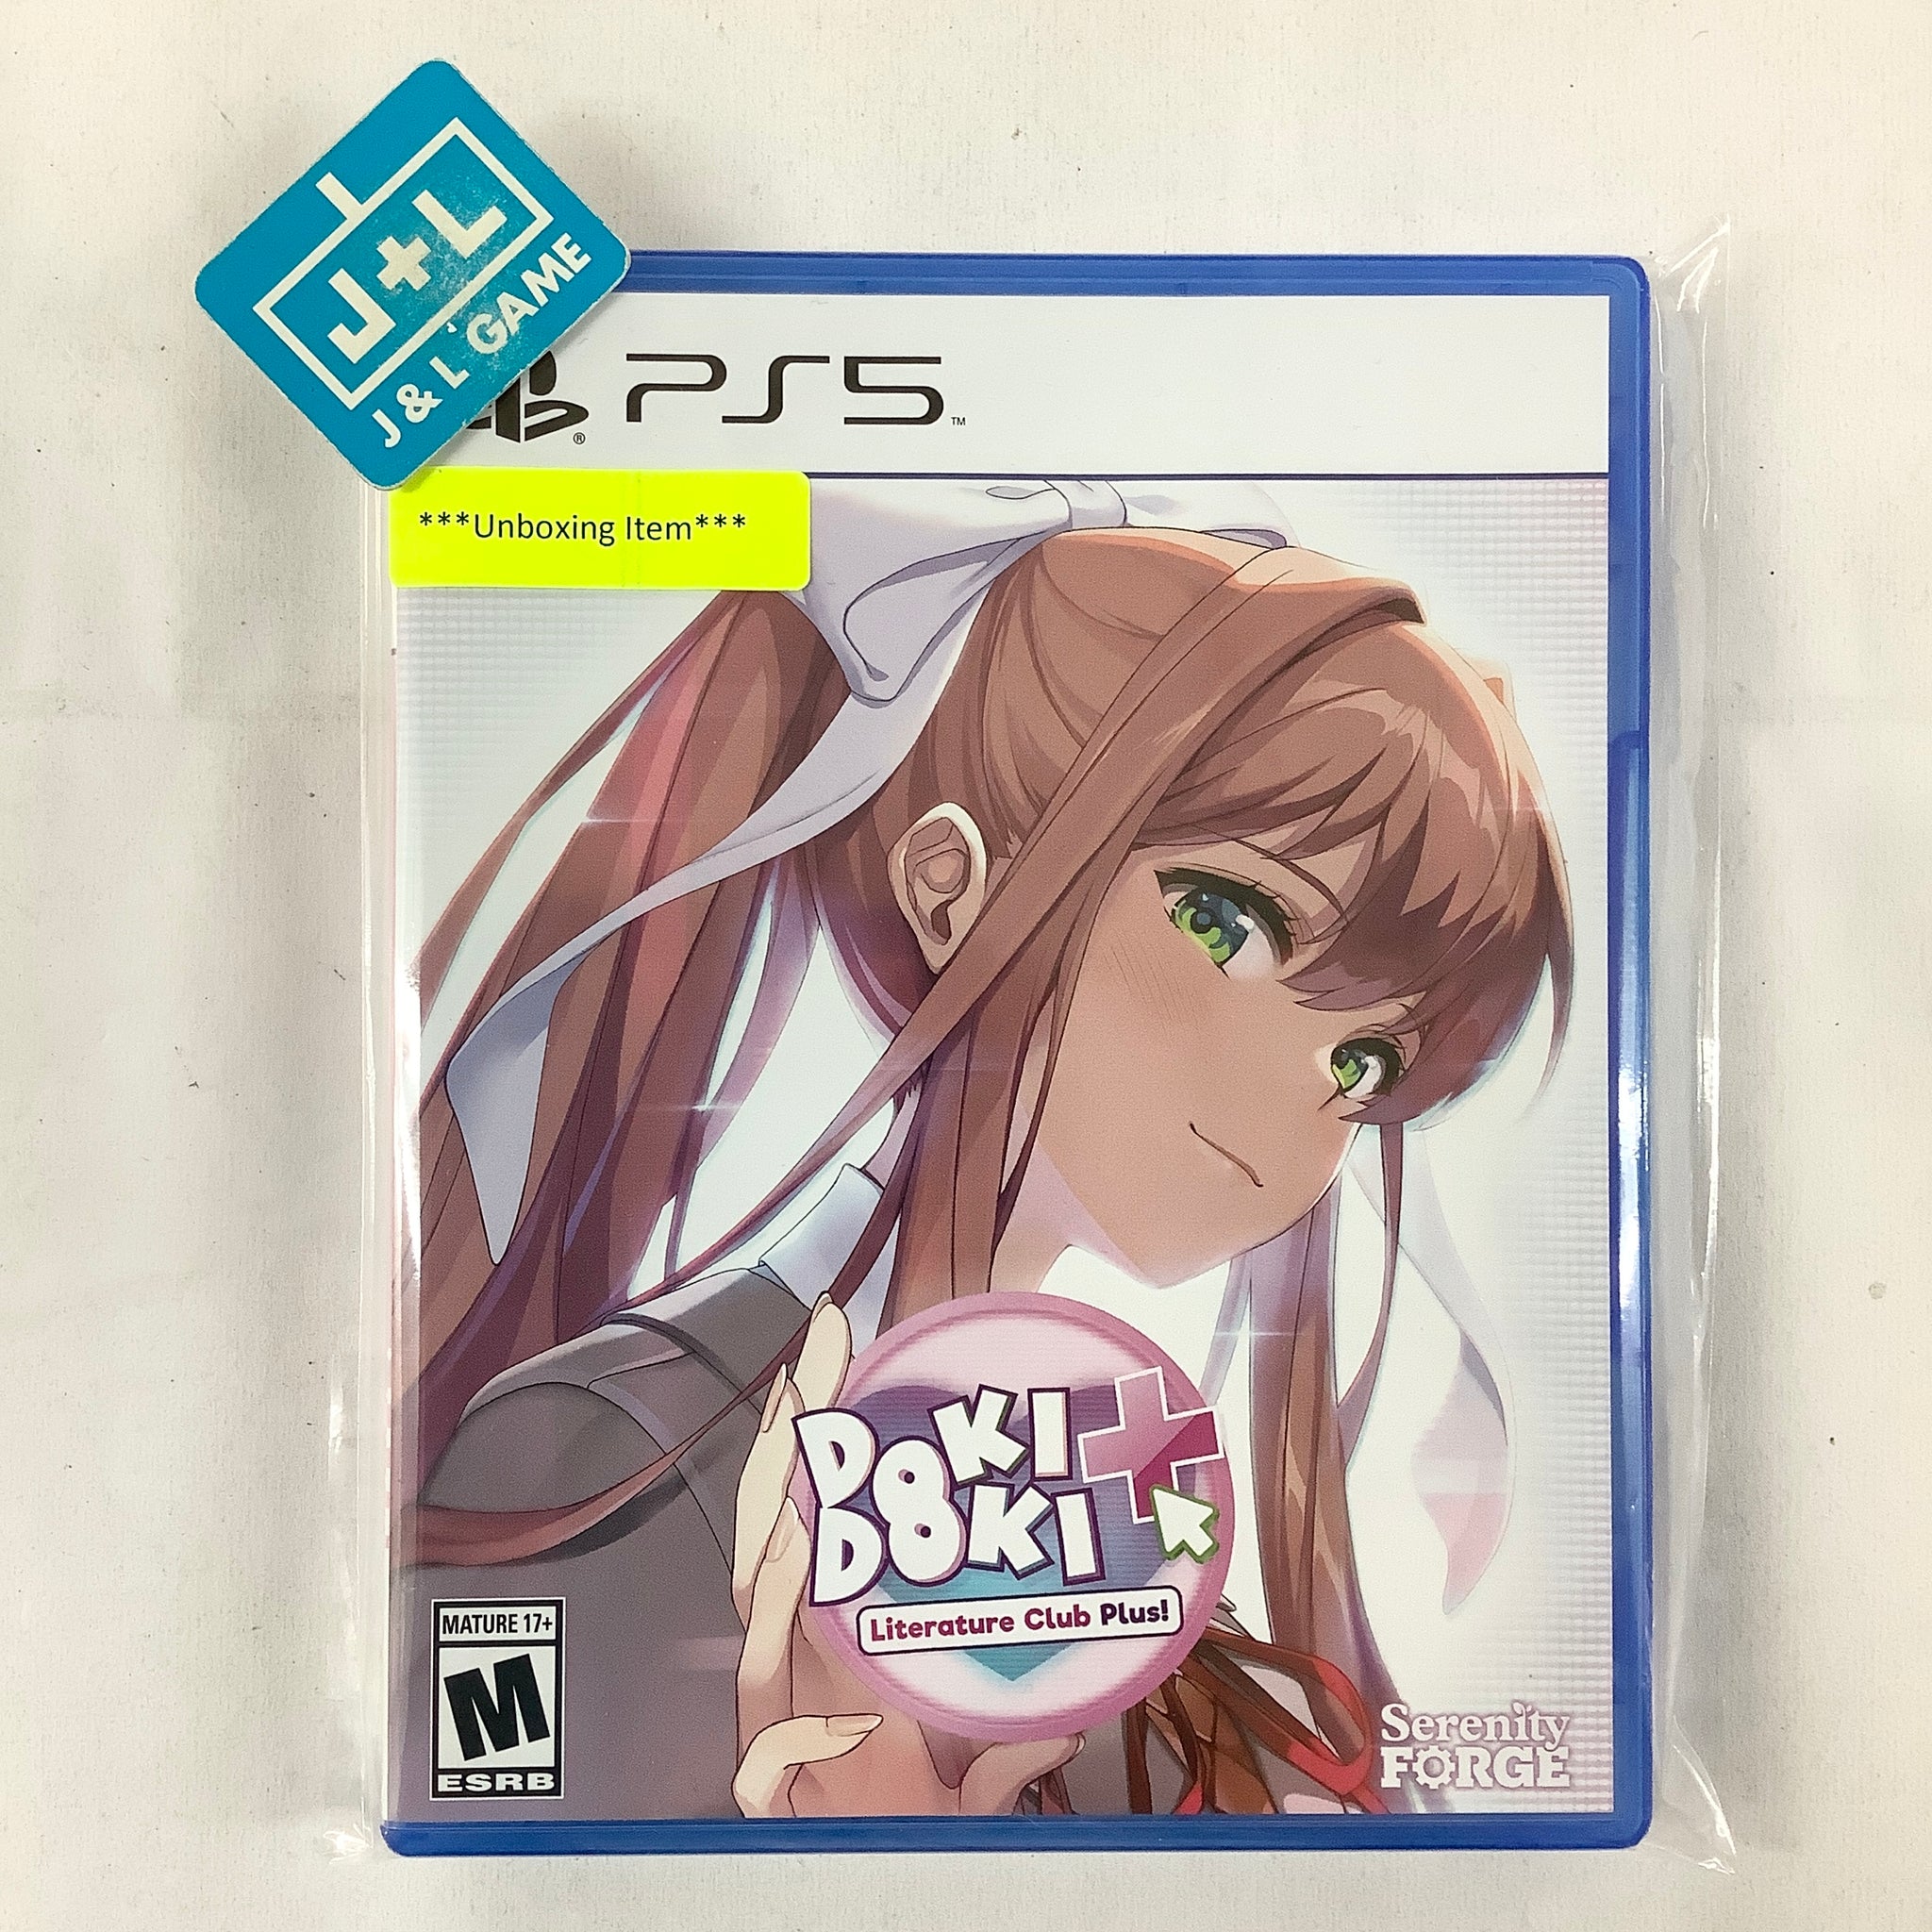 Doki Doki Literature Club Plus! Premium Physical Edition - PlayStation 5 